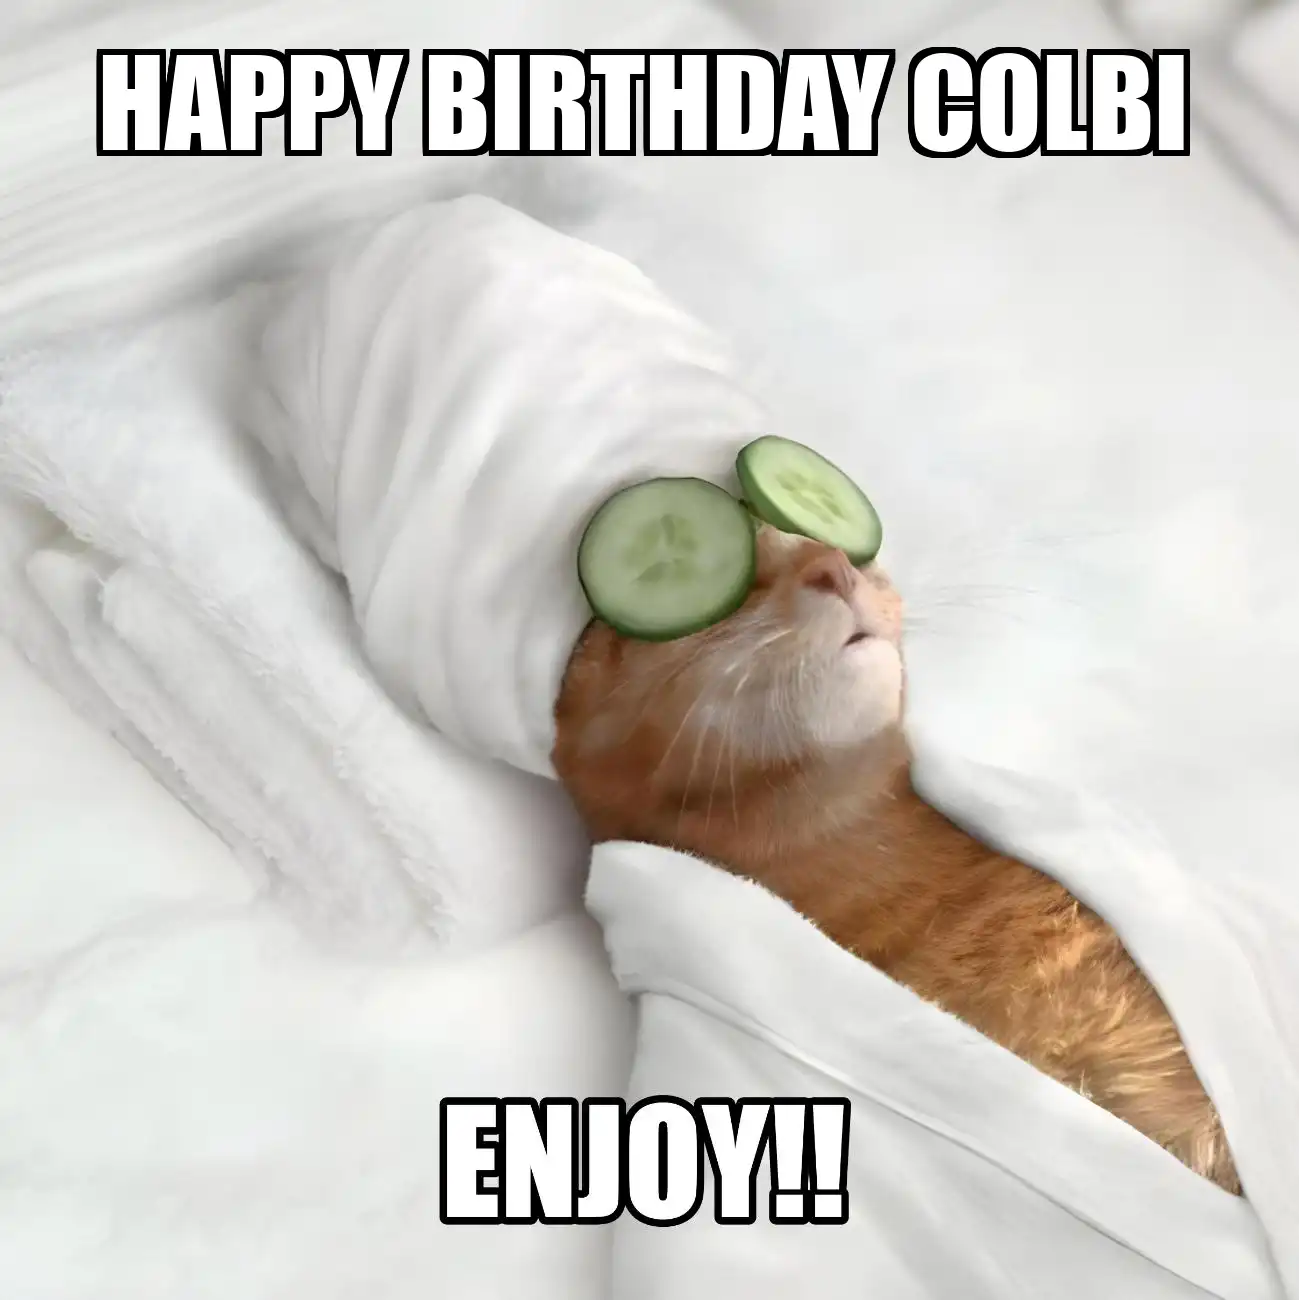 Happy Birthday Colbi Enjoy Cat Meme